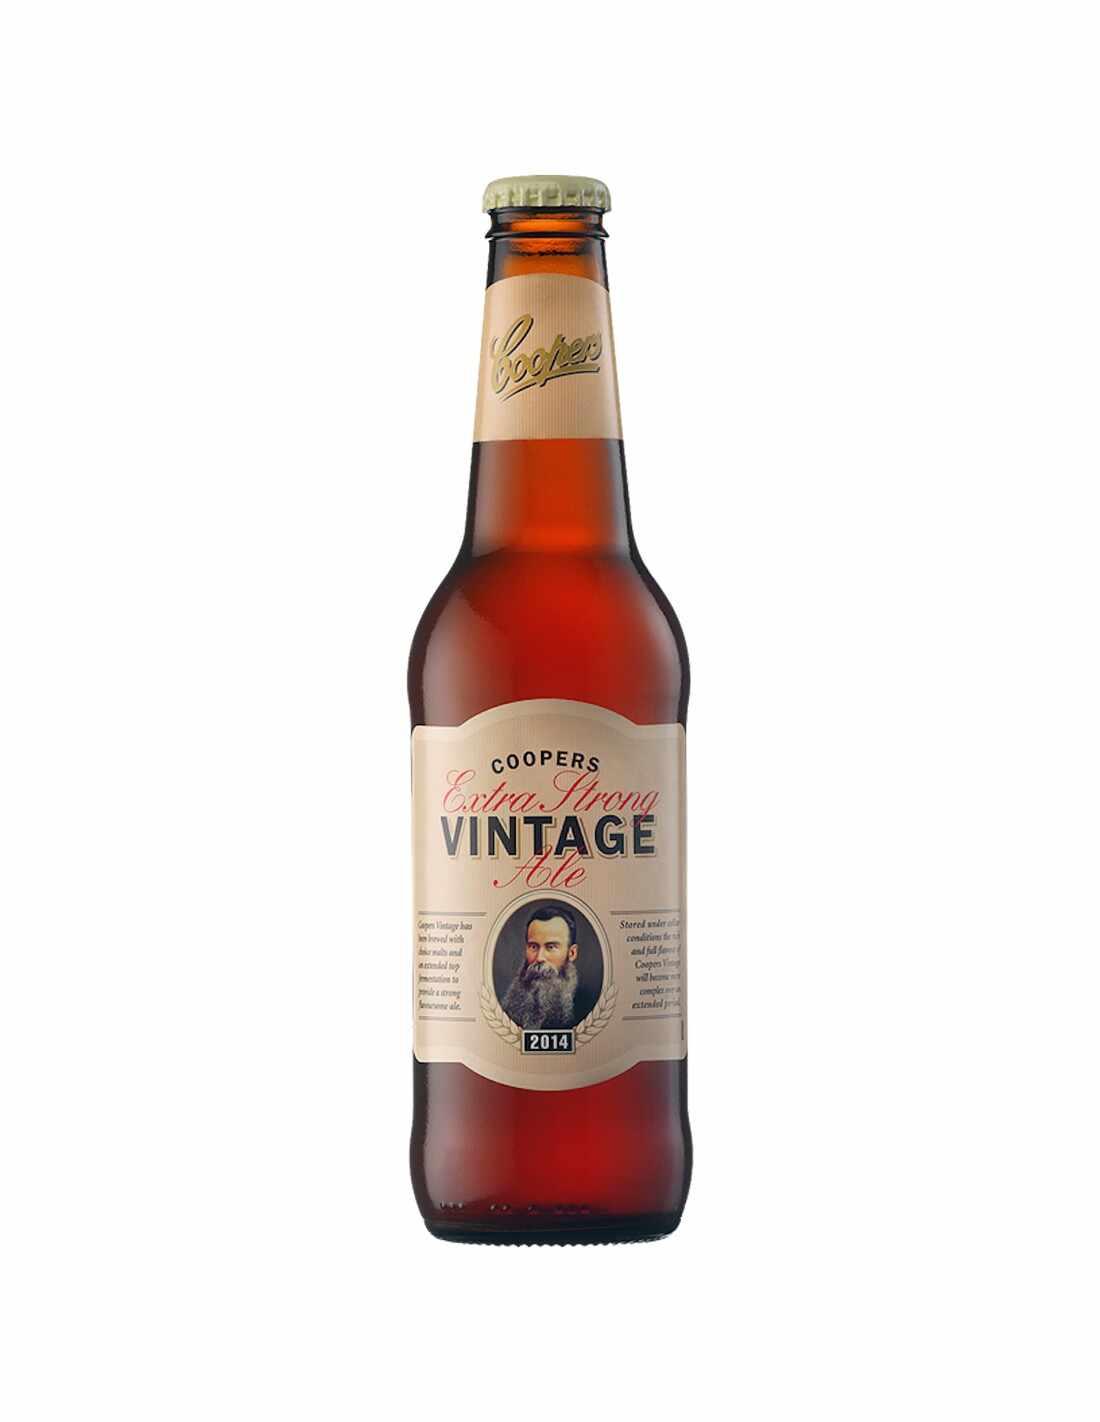 Bere blonda Ale, Coopers Vintage, 2014, 7.5% alc., 0.35L, Australia